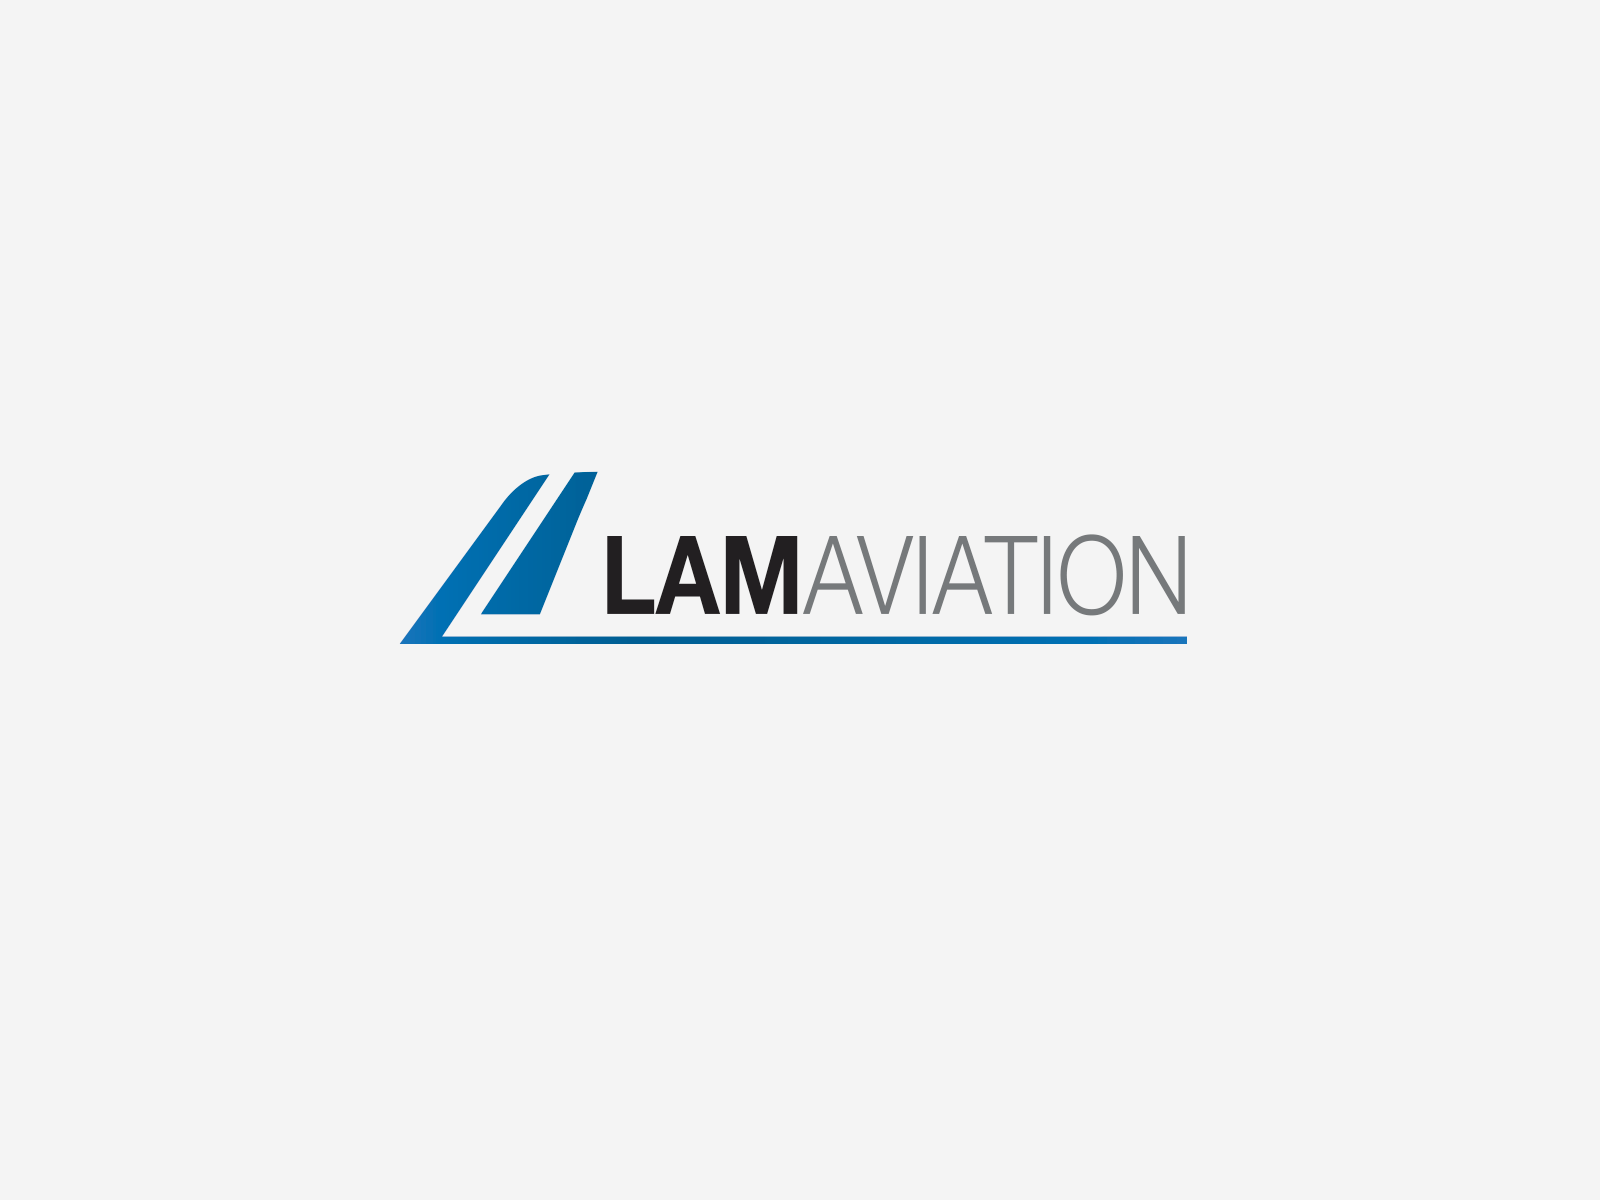 Lam Aviation by Sebastian Darlak on Dribbble